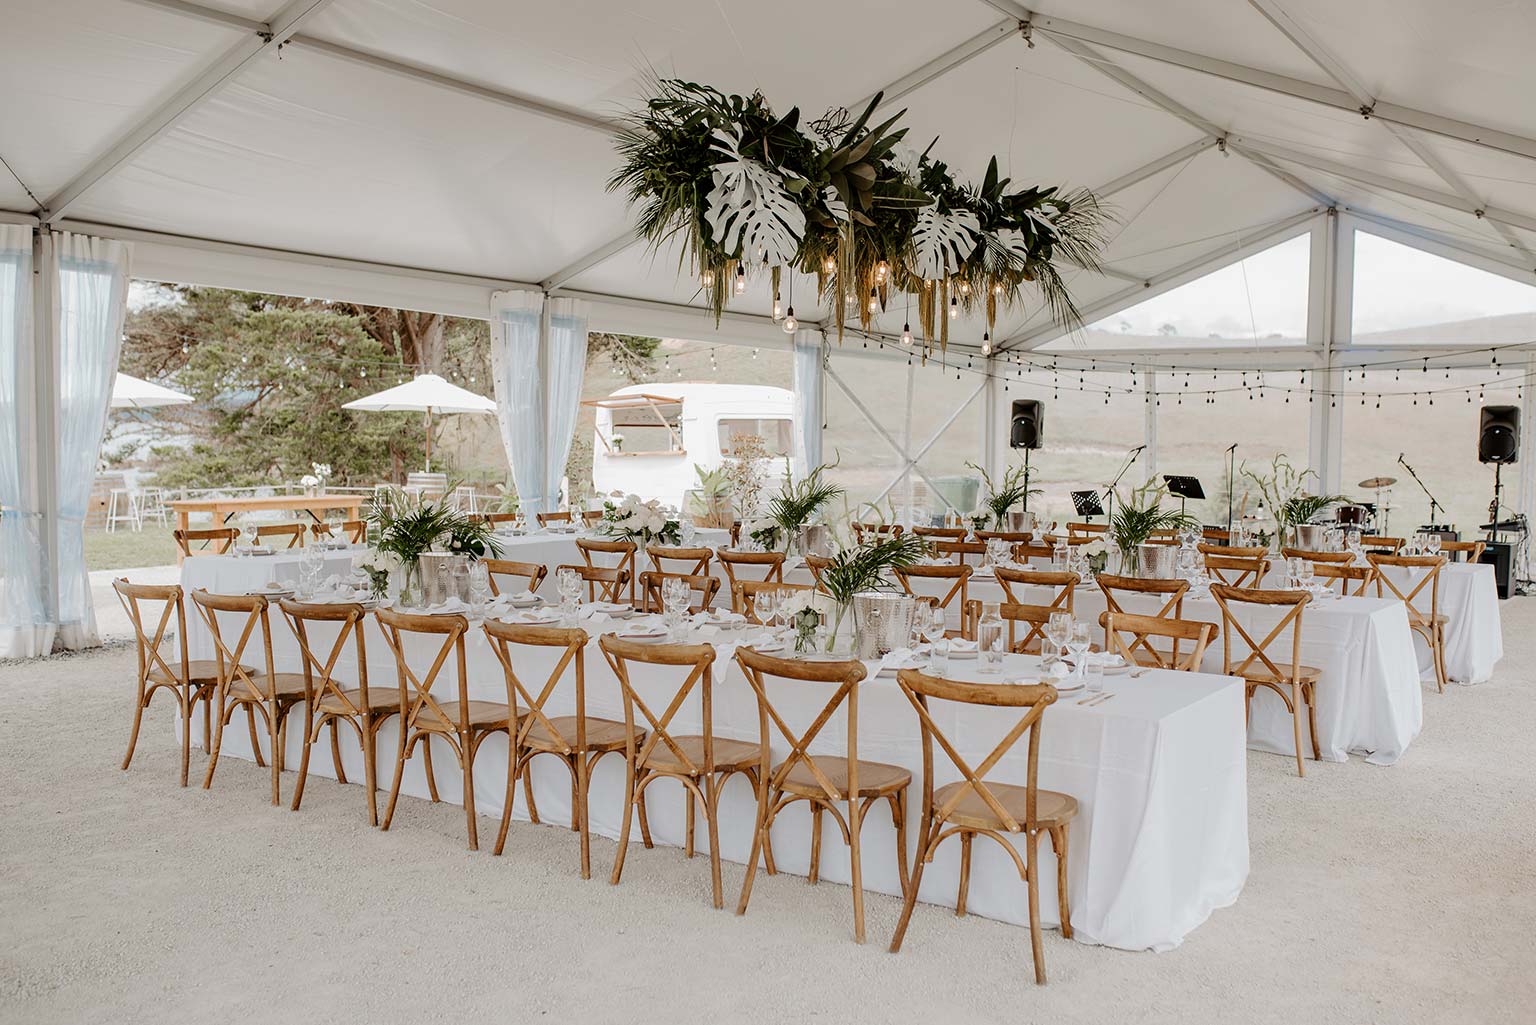 Vinka Design Features Real Weddings - wedding reception tables set up